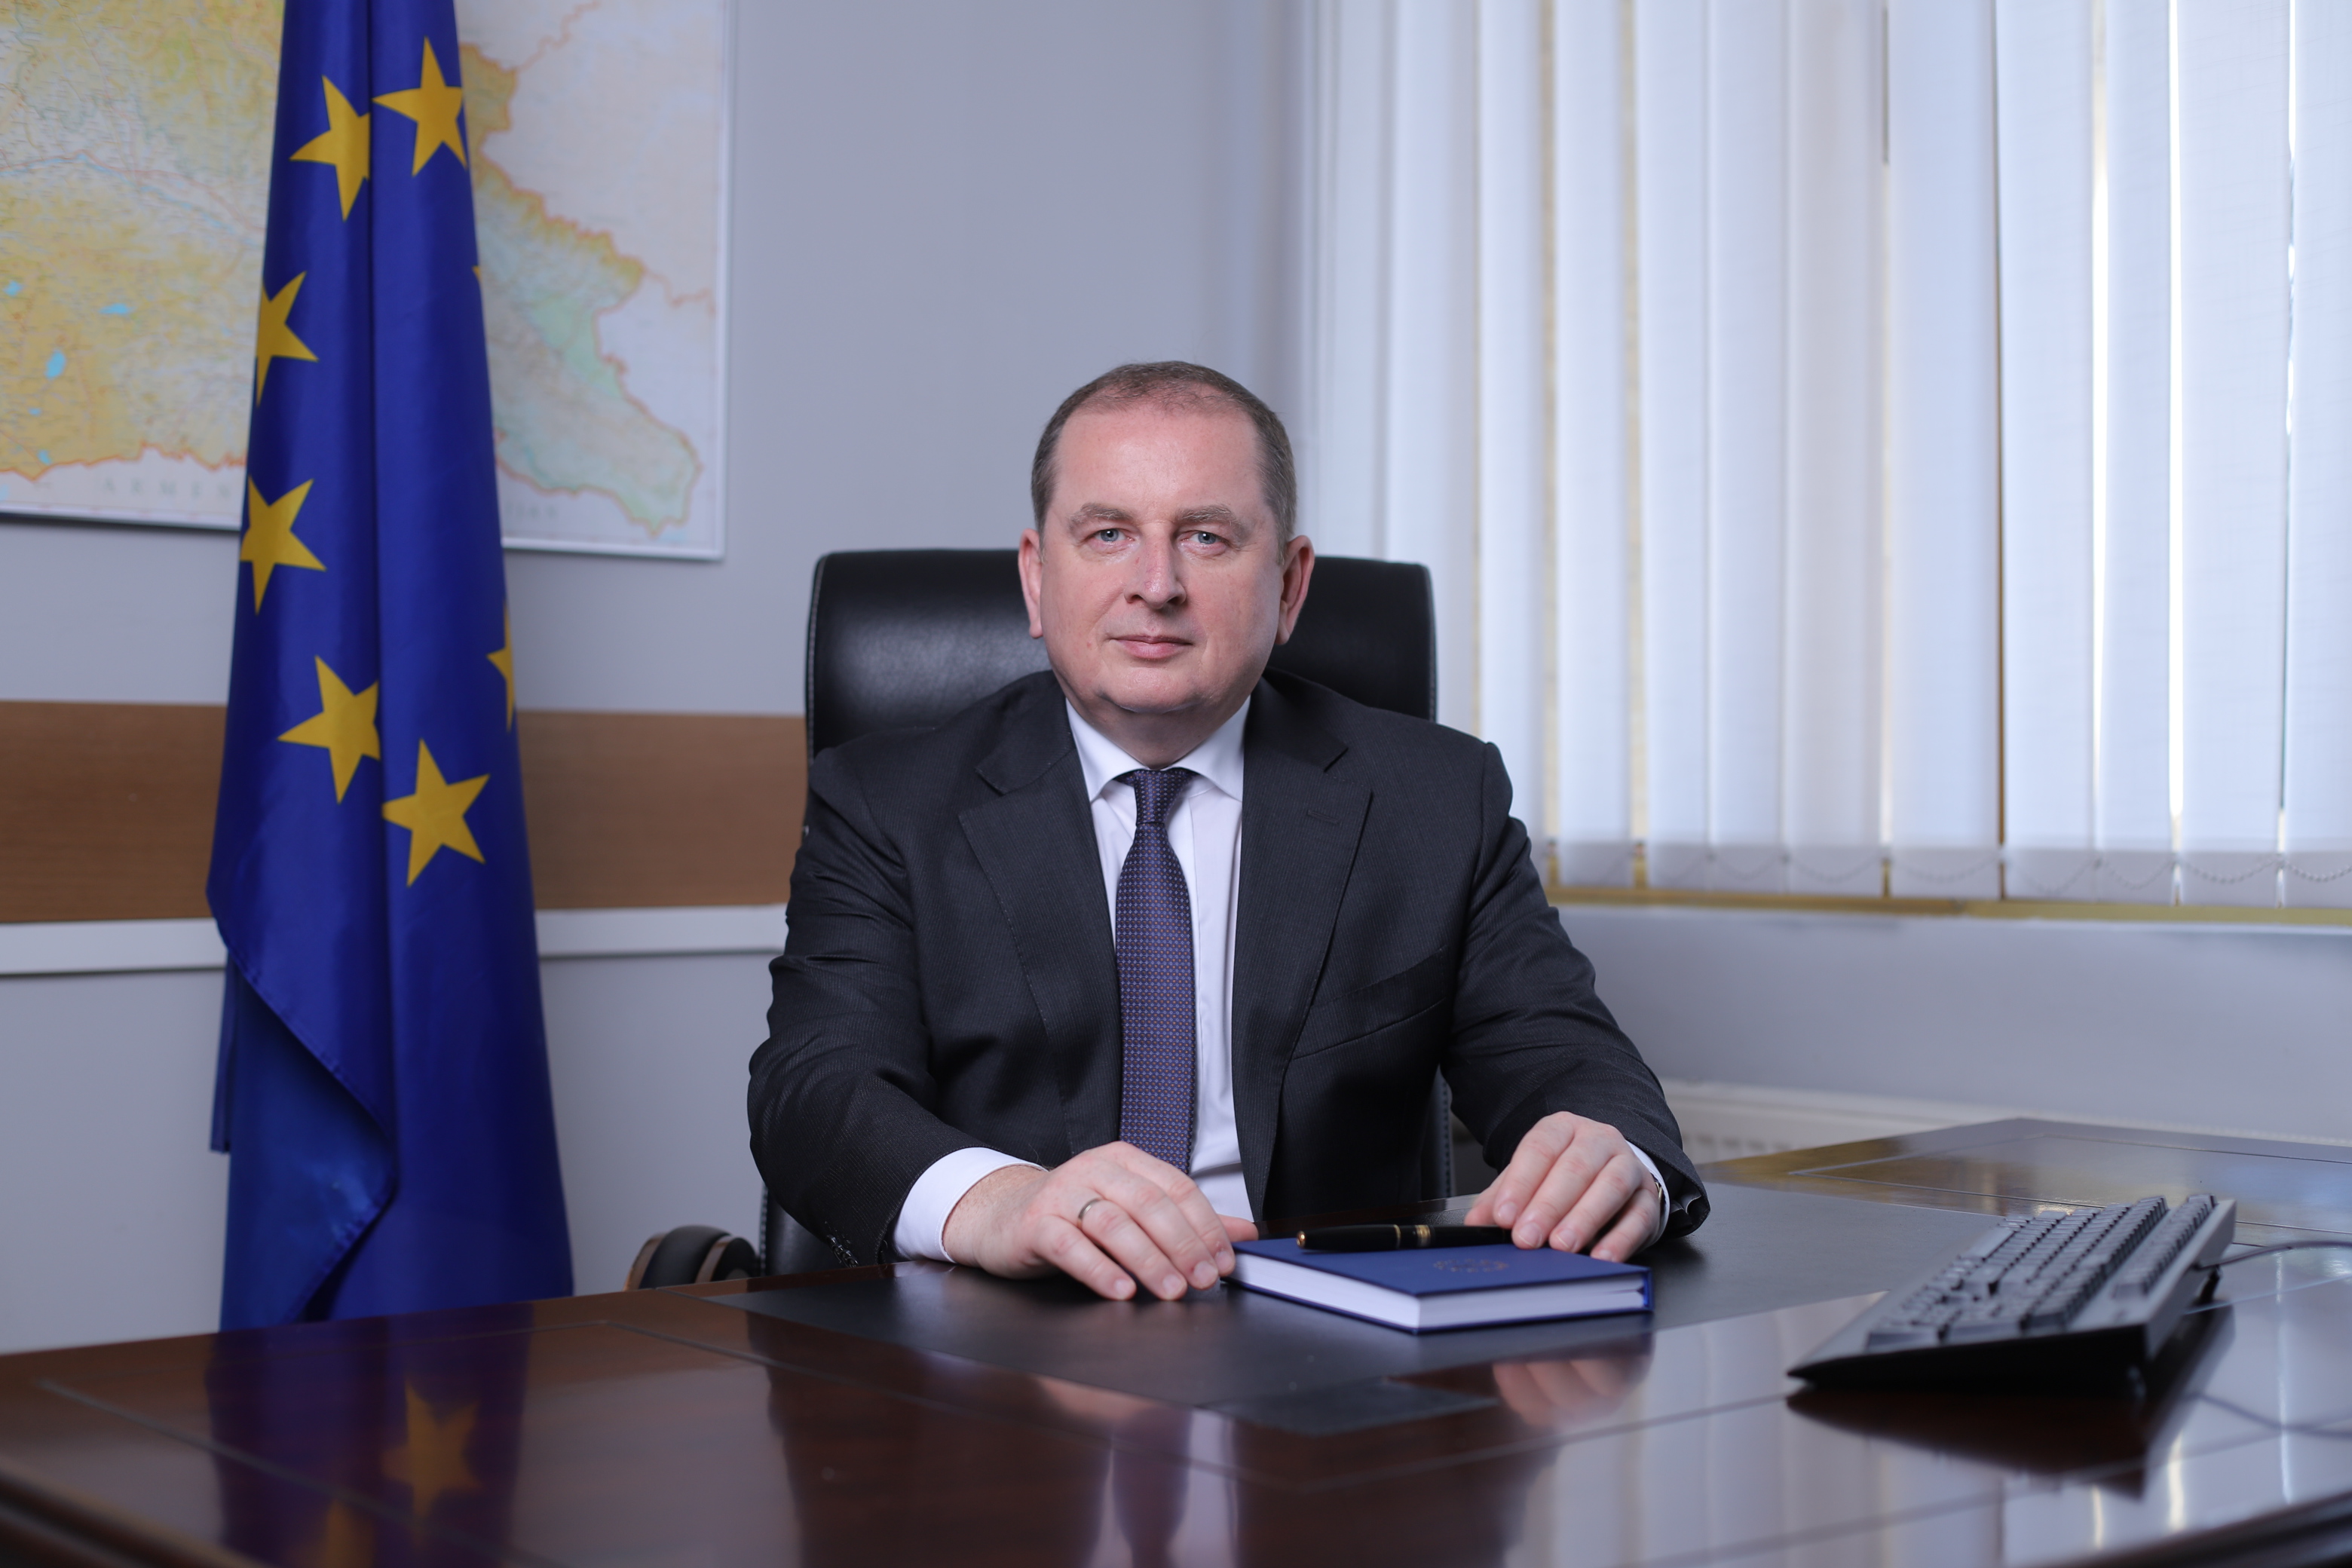 Ambassador Marek Szczygieł gives an intreview to 